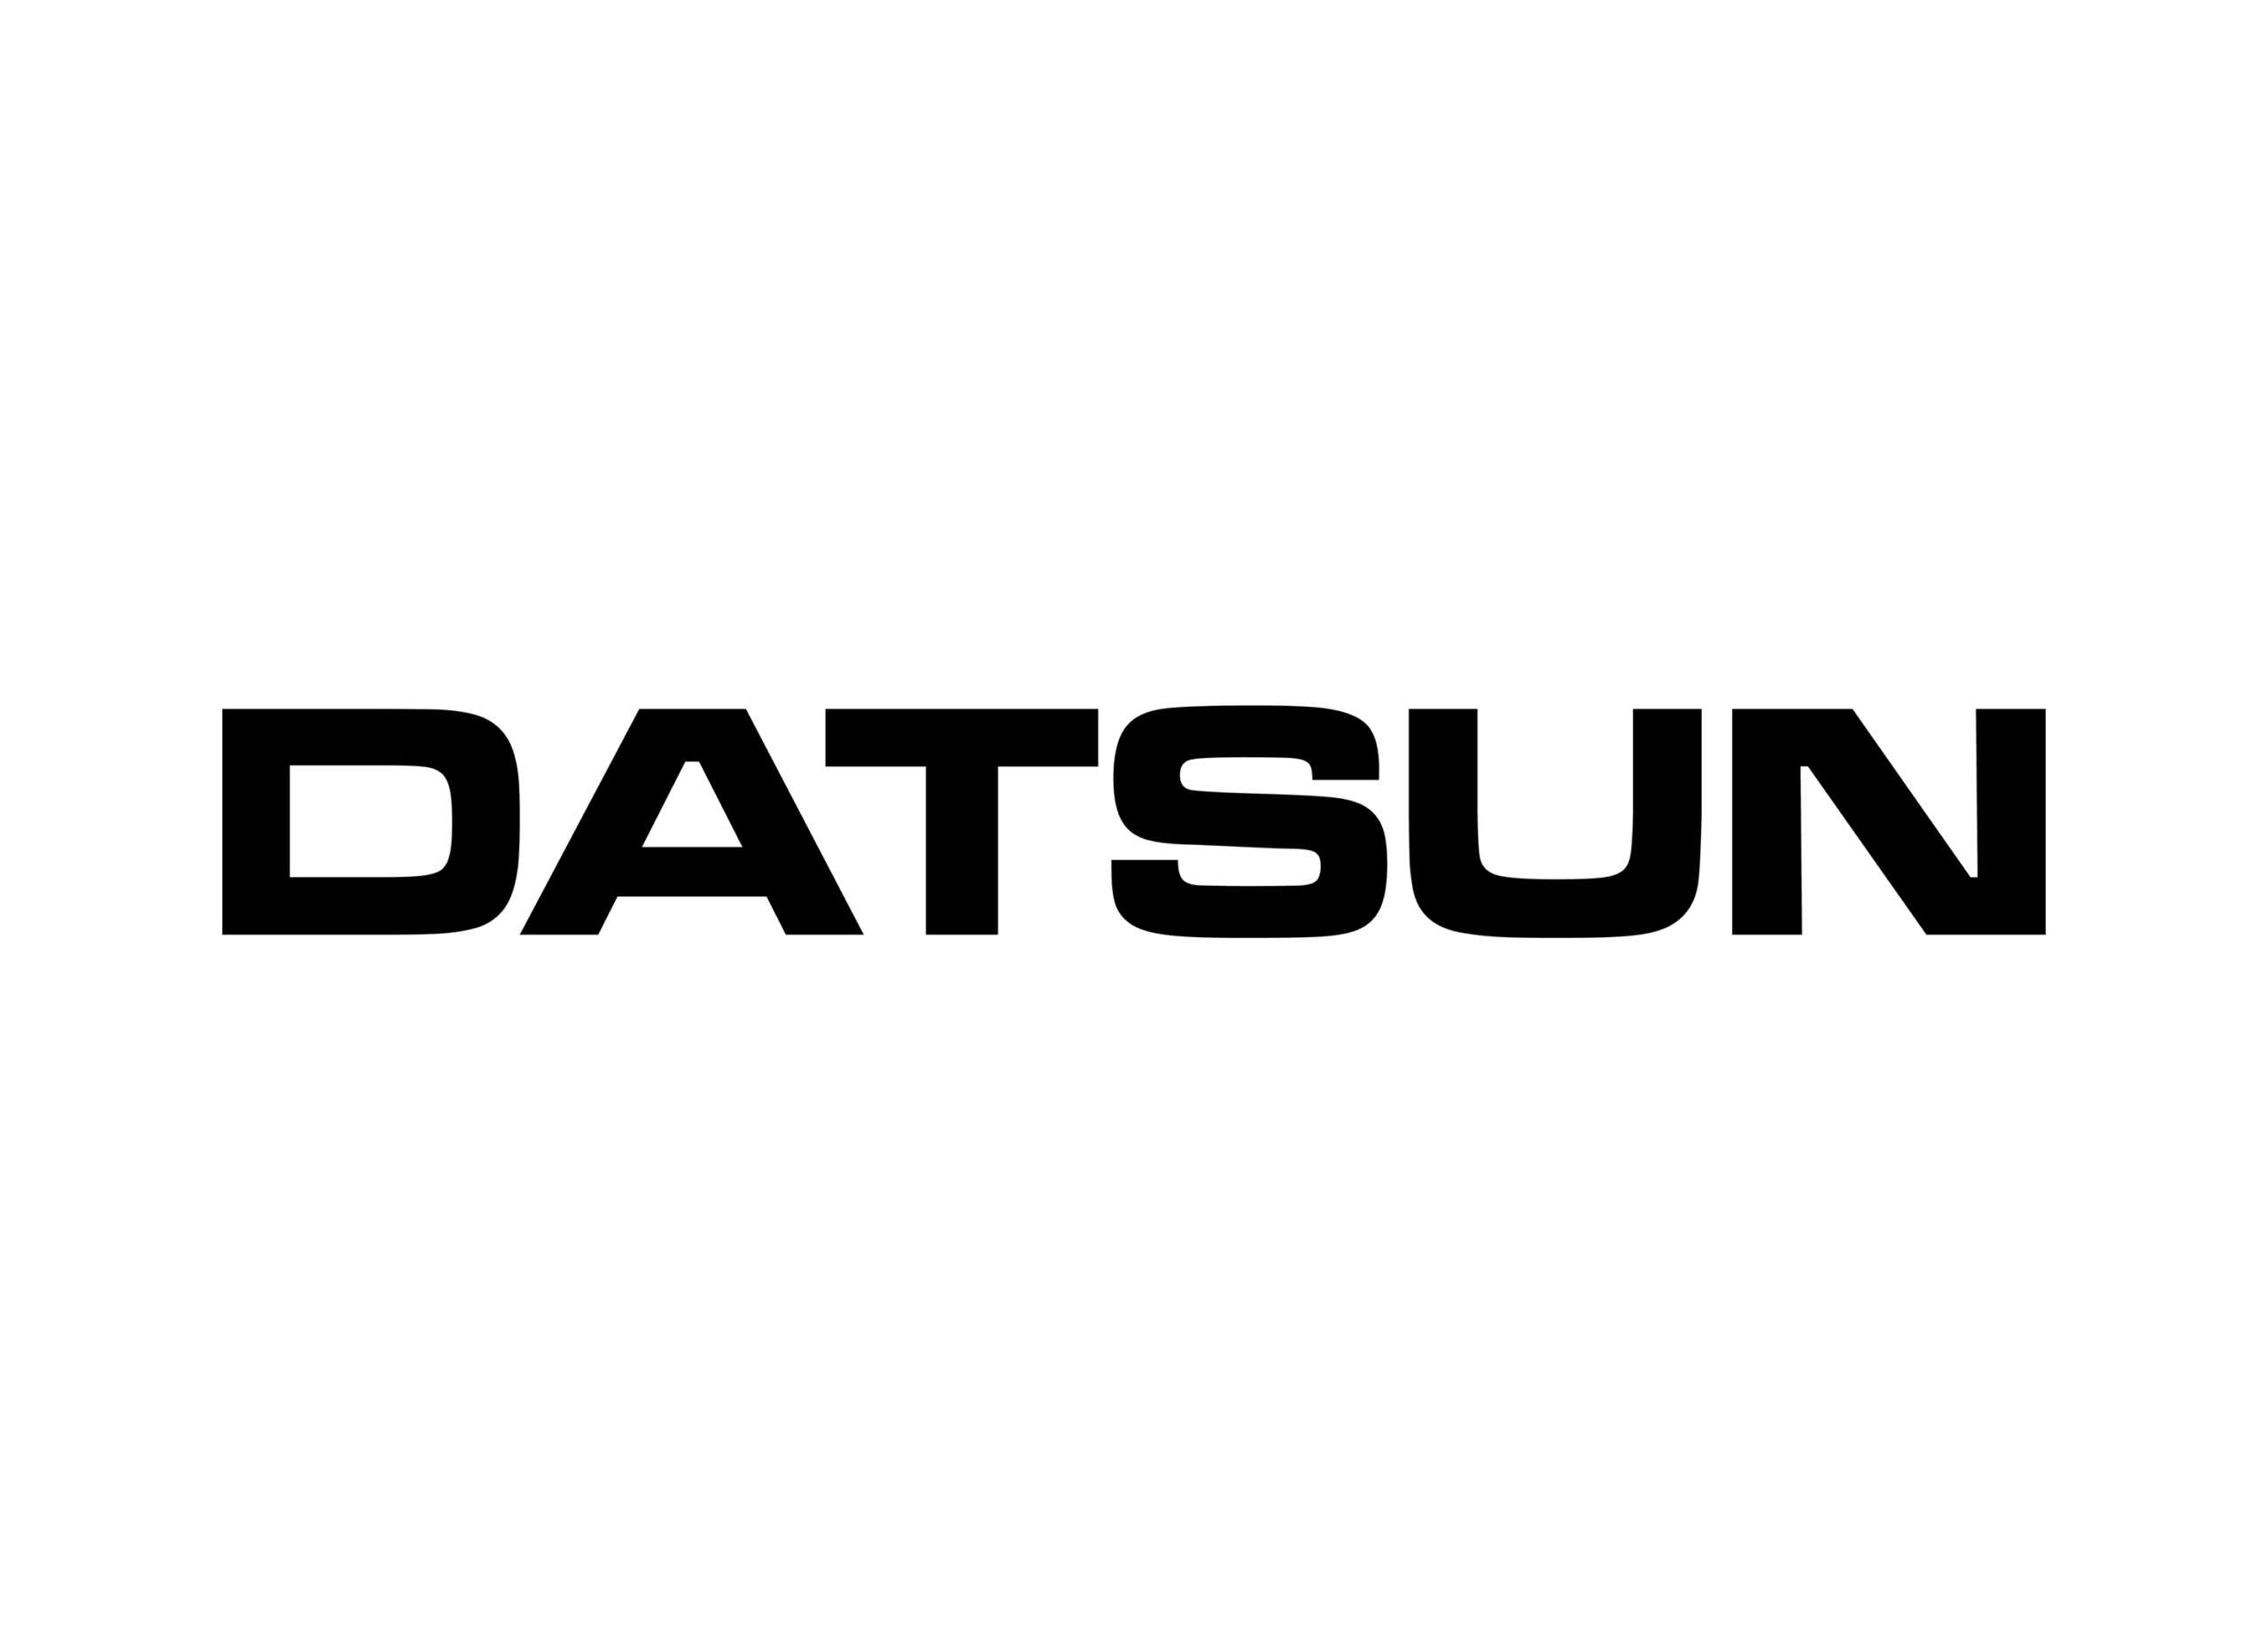 Datsun logo 1965-1986